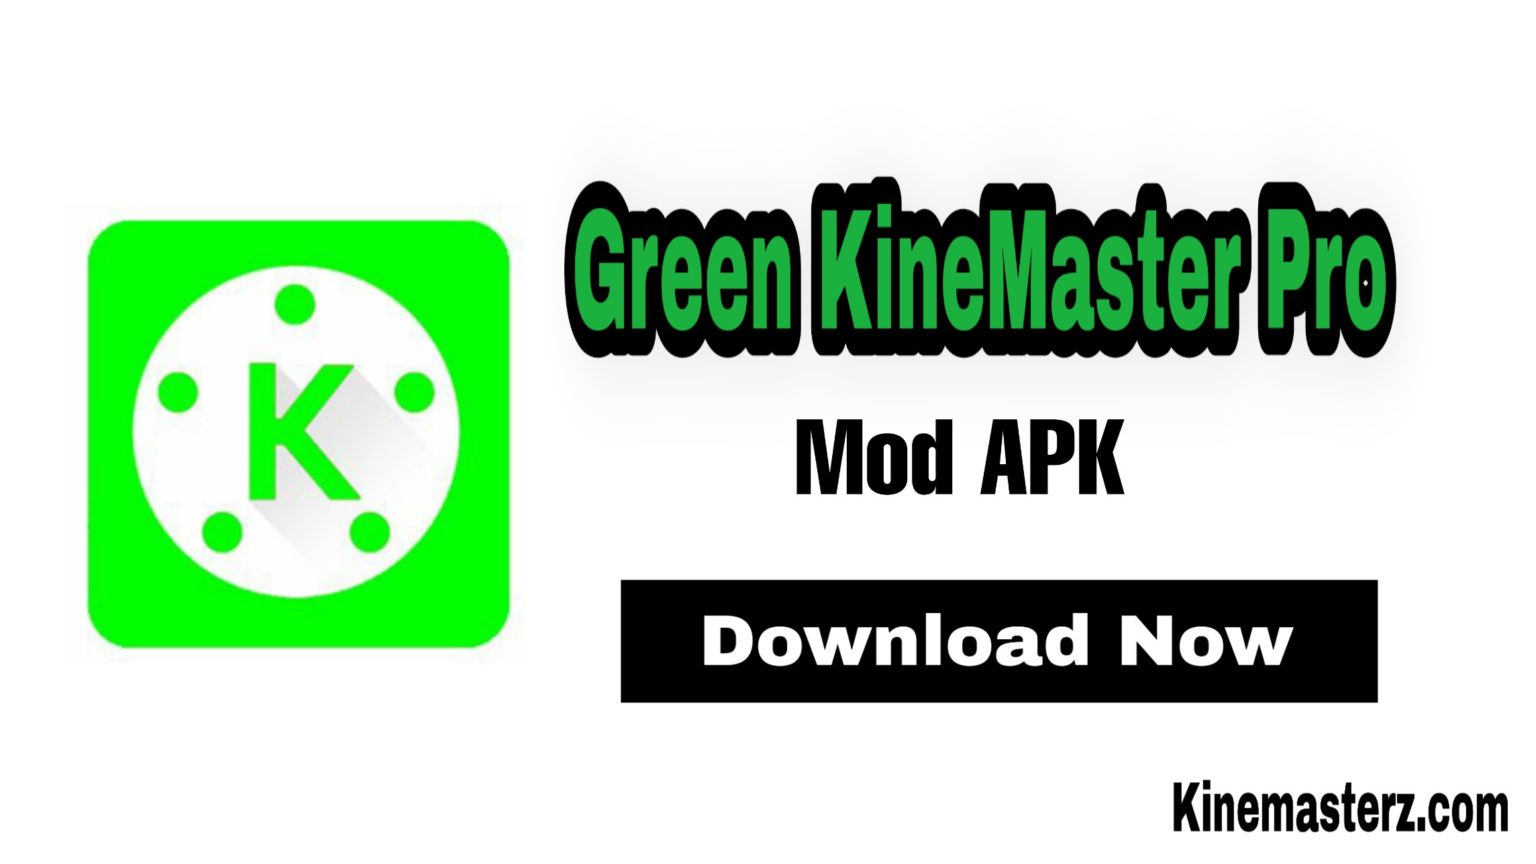 green kinemaster pro app download